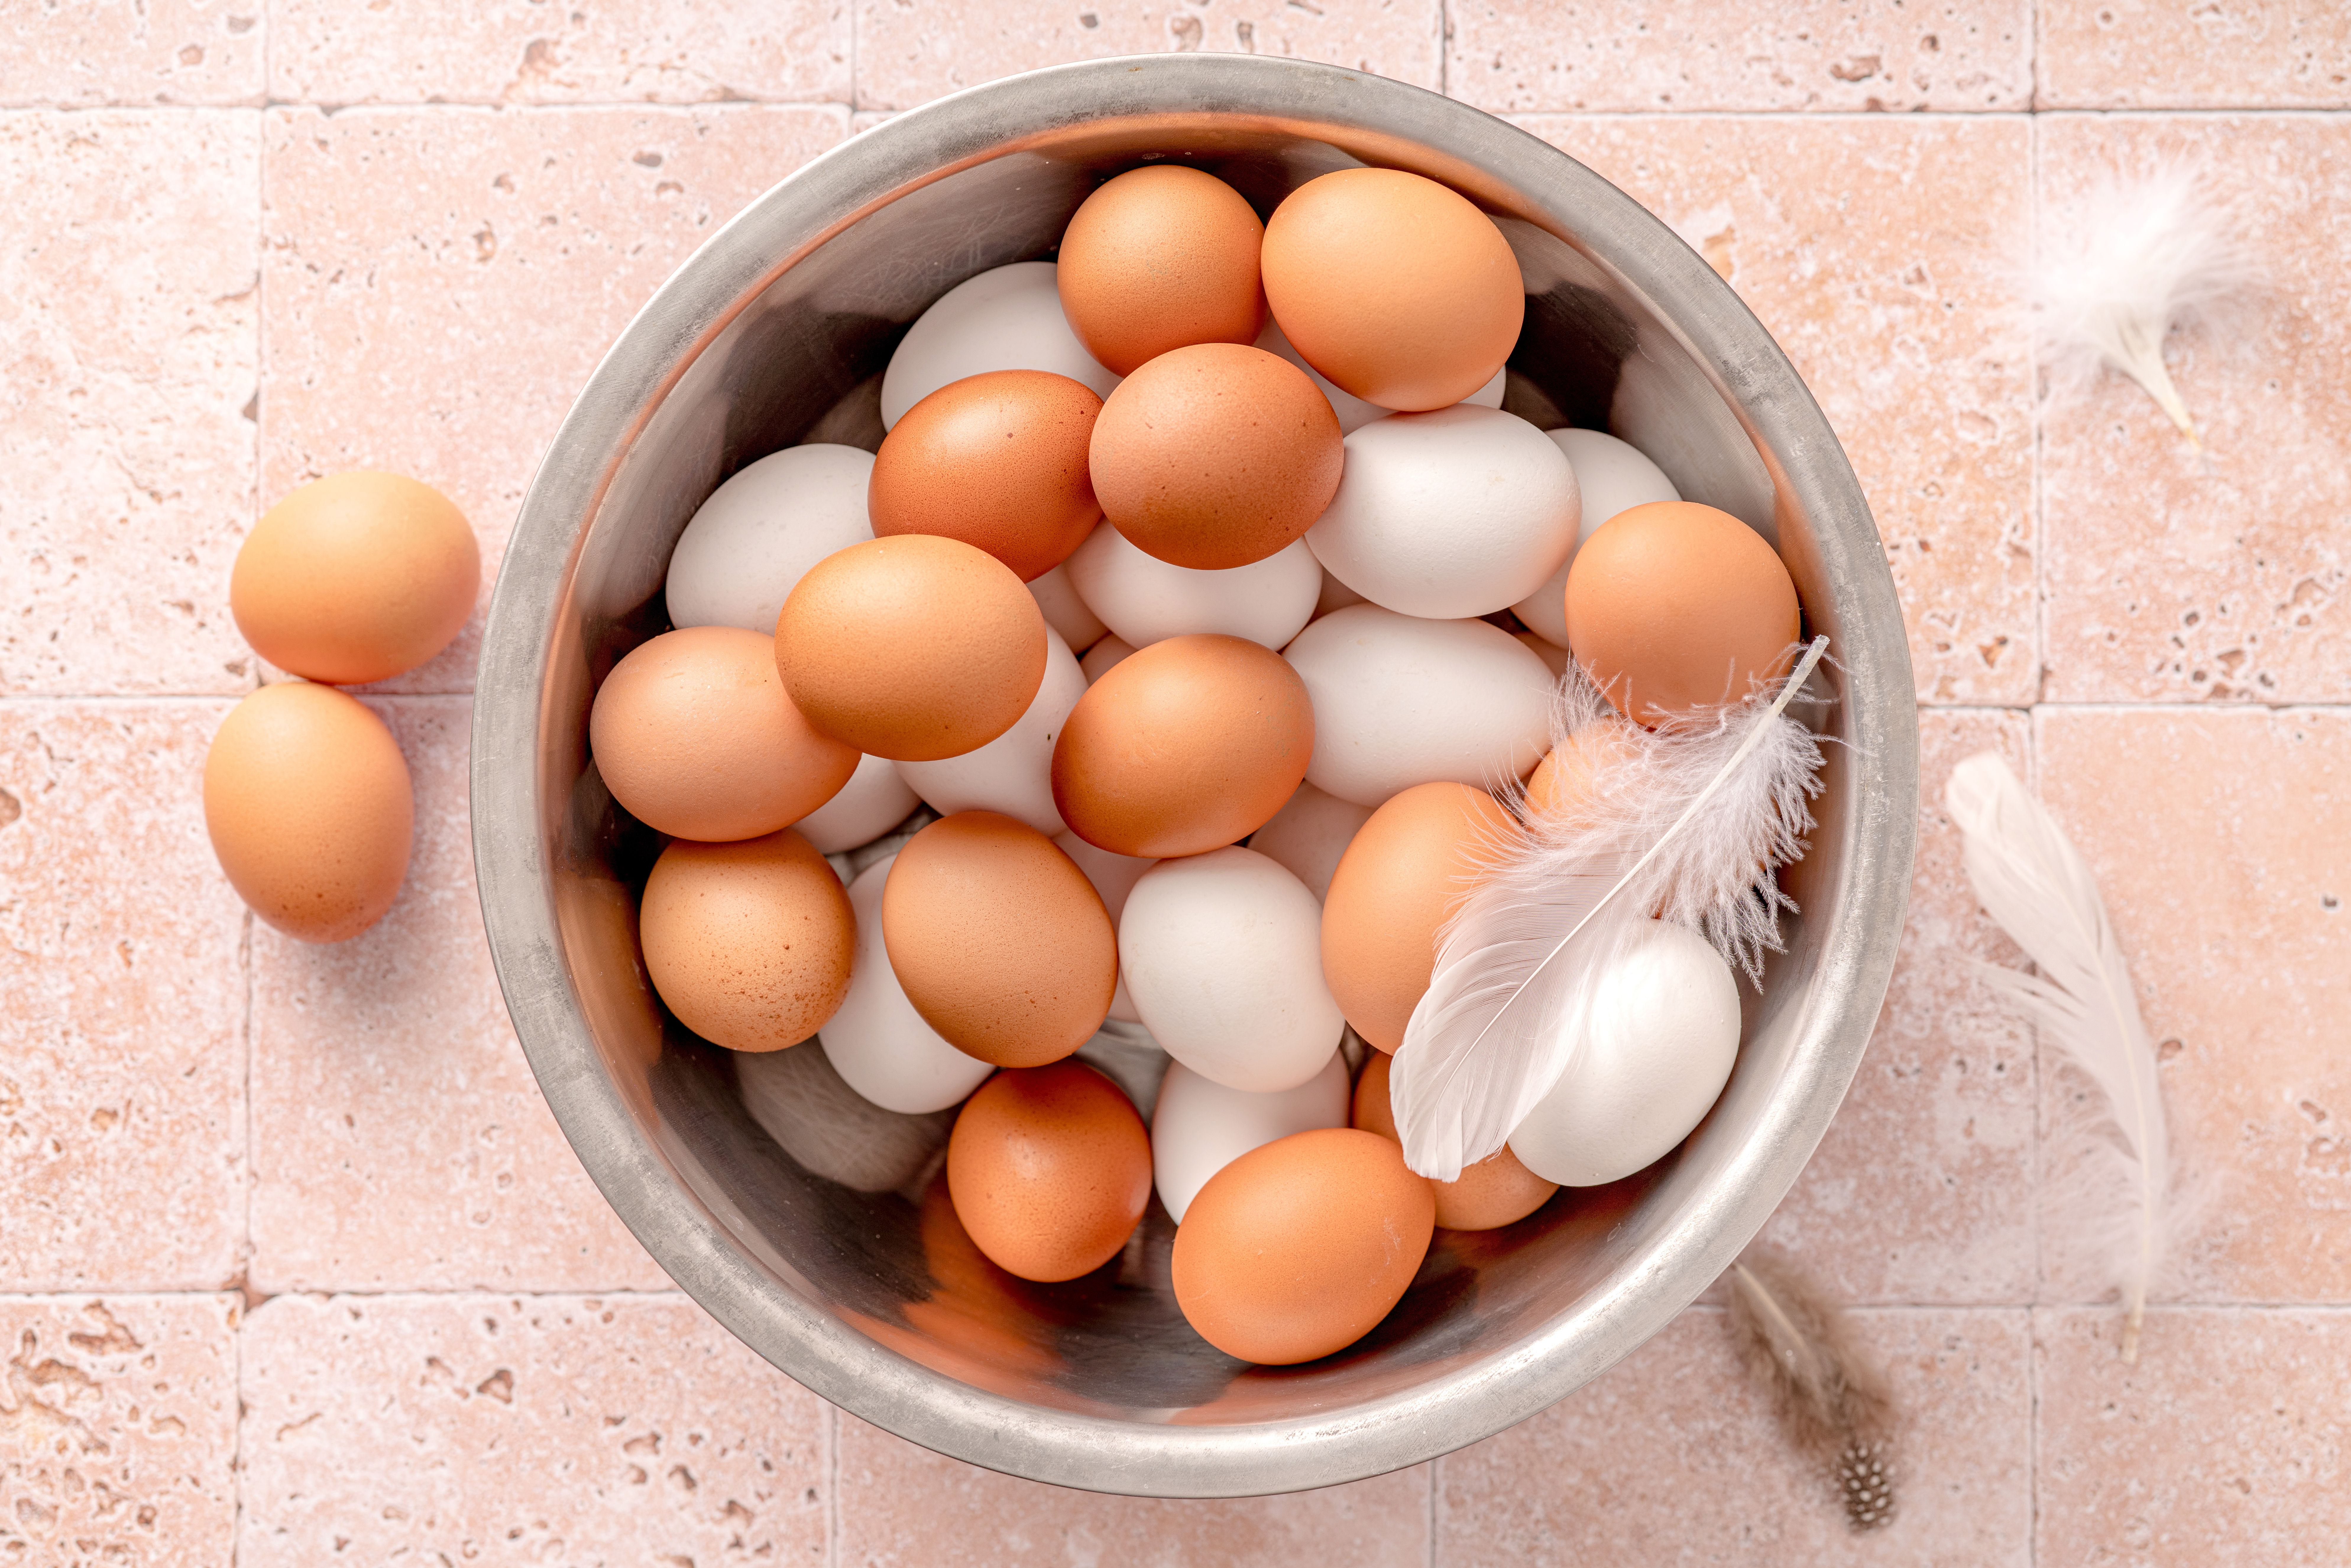 Cómo saber si un huevo está malo sin abrirlo